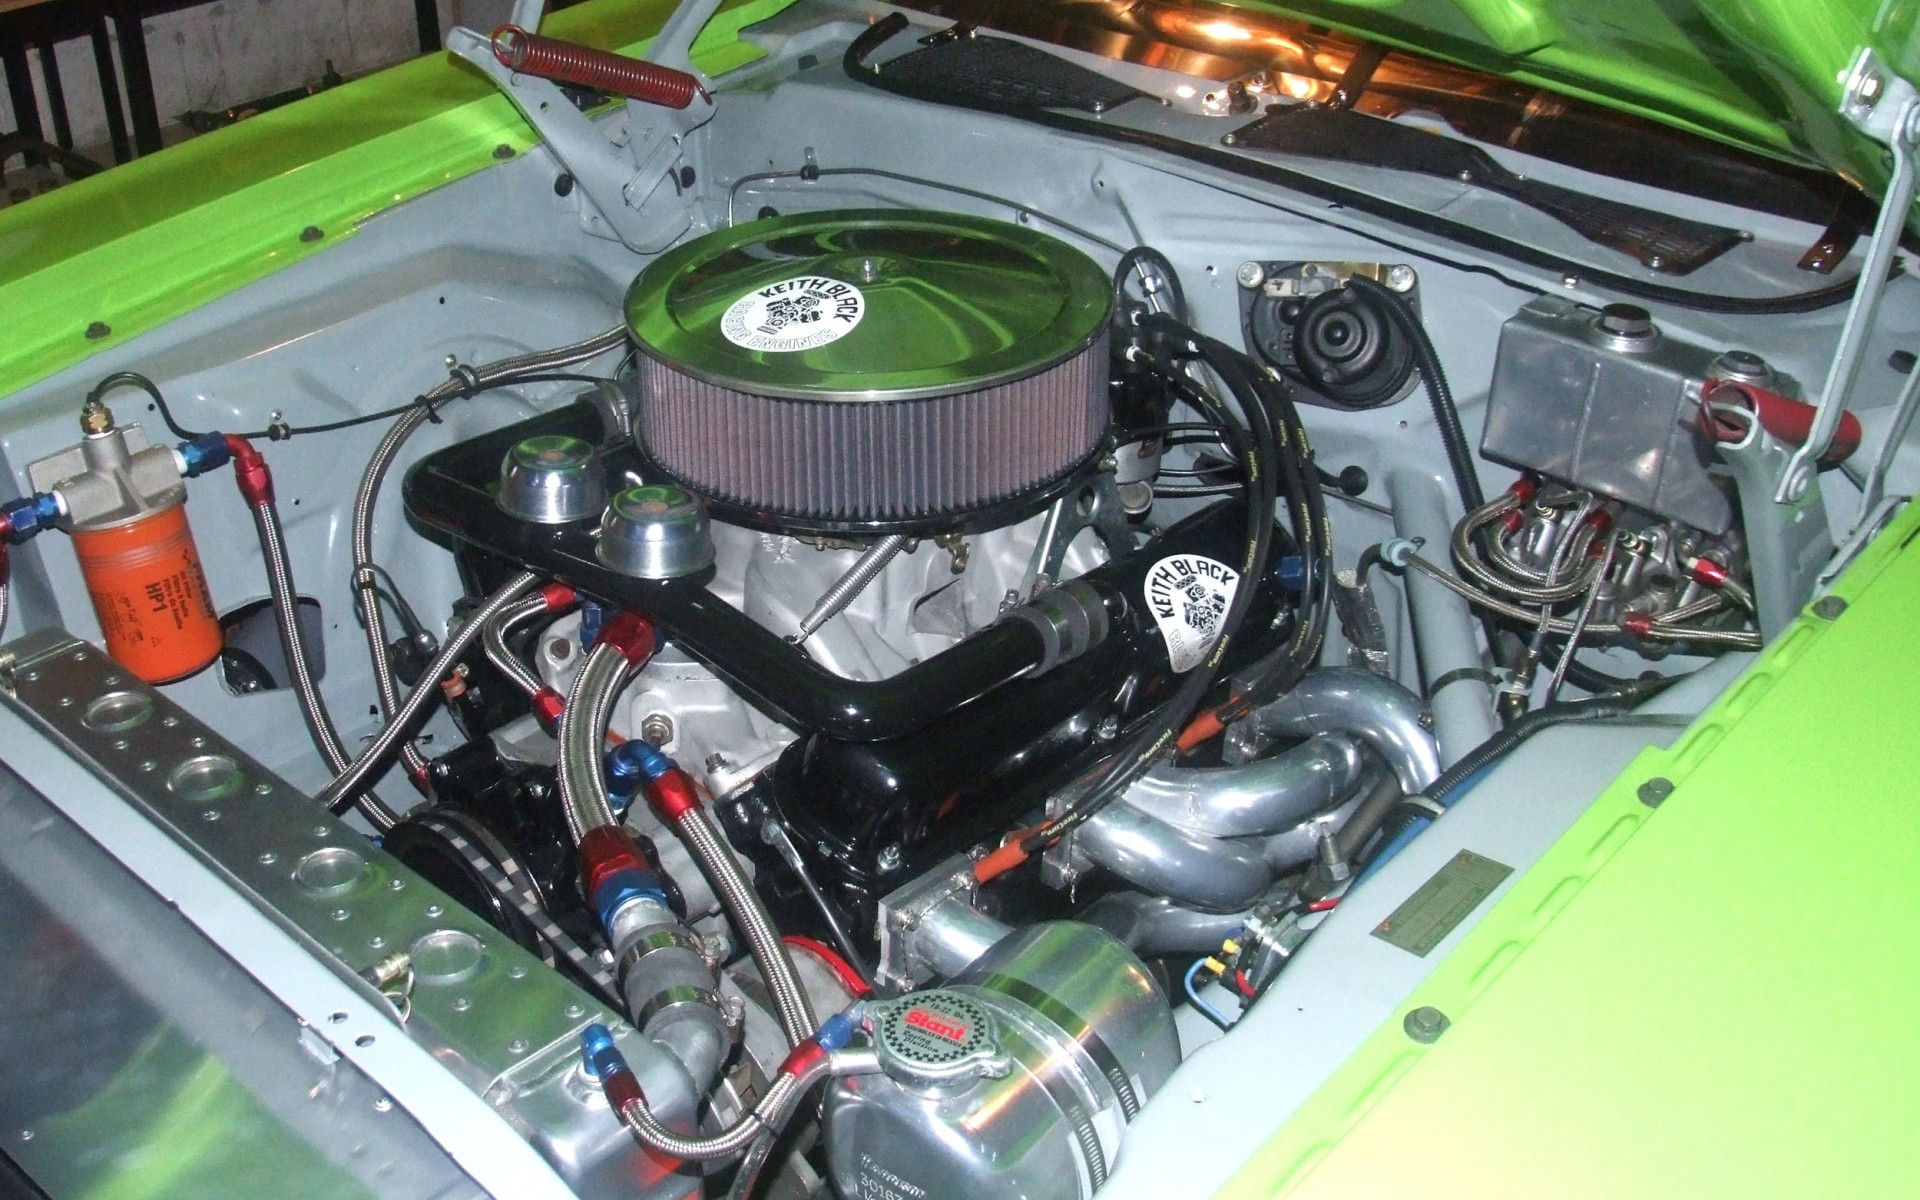 Keith Black TA engine